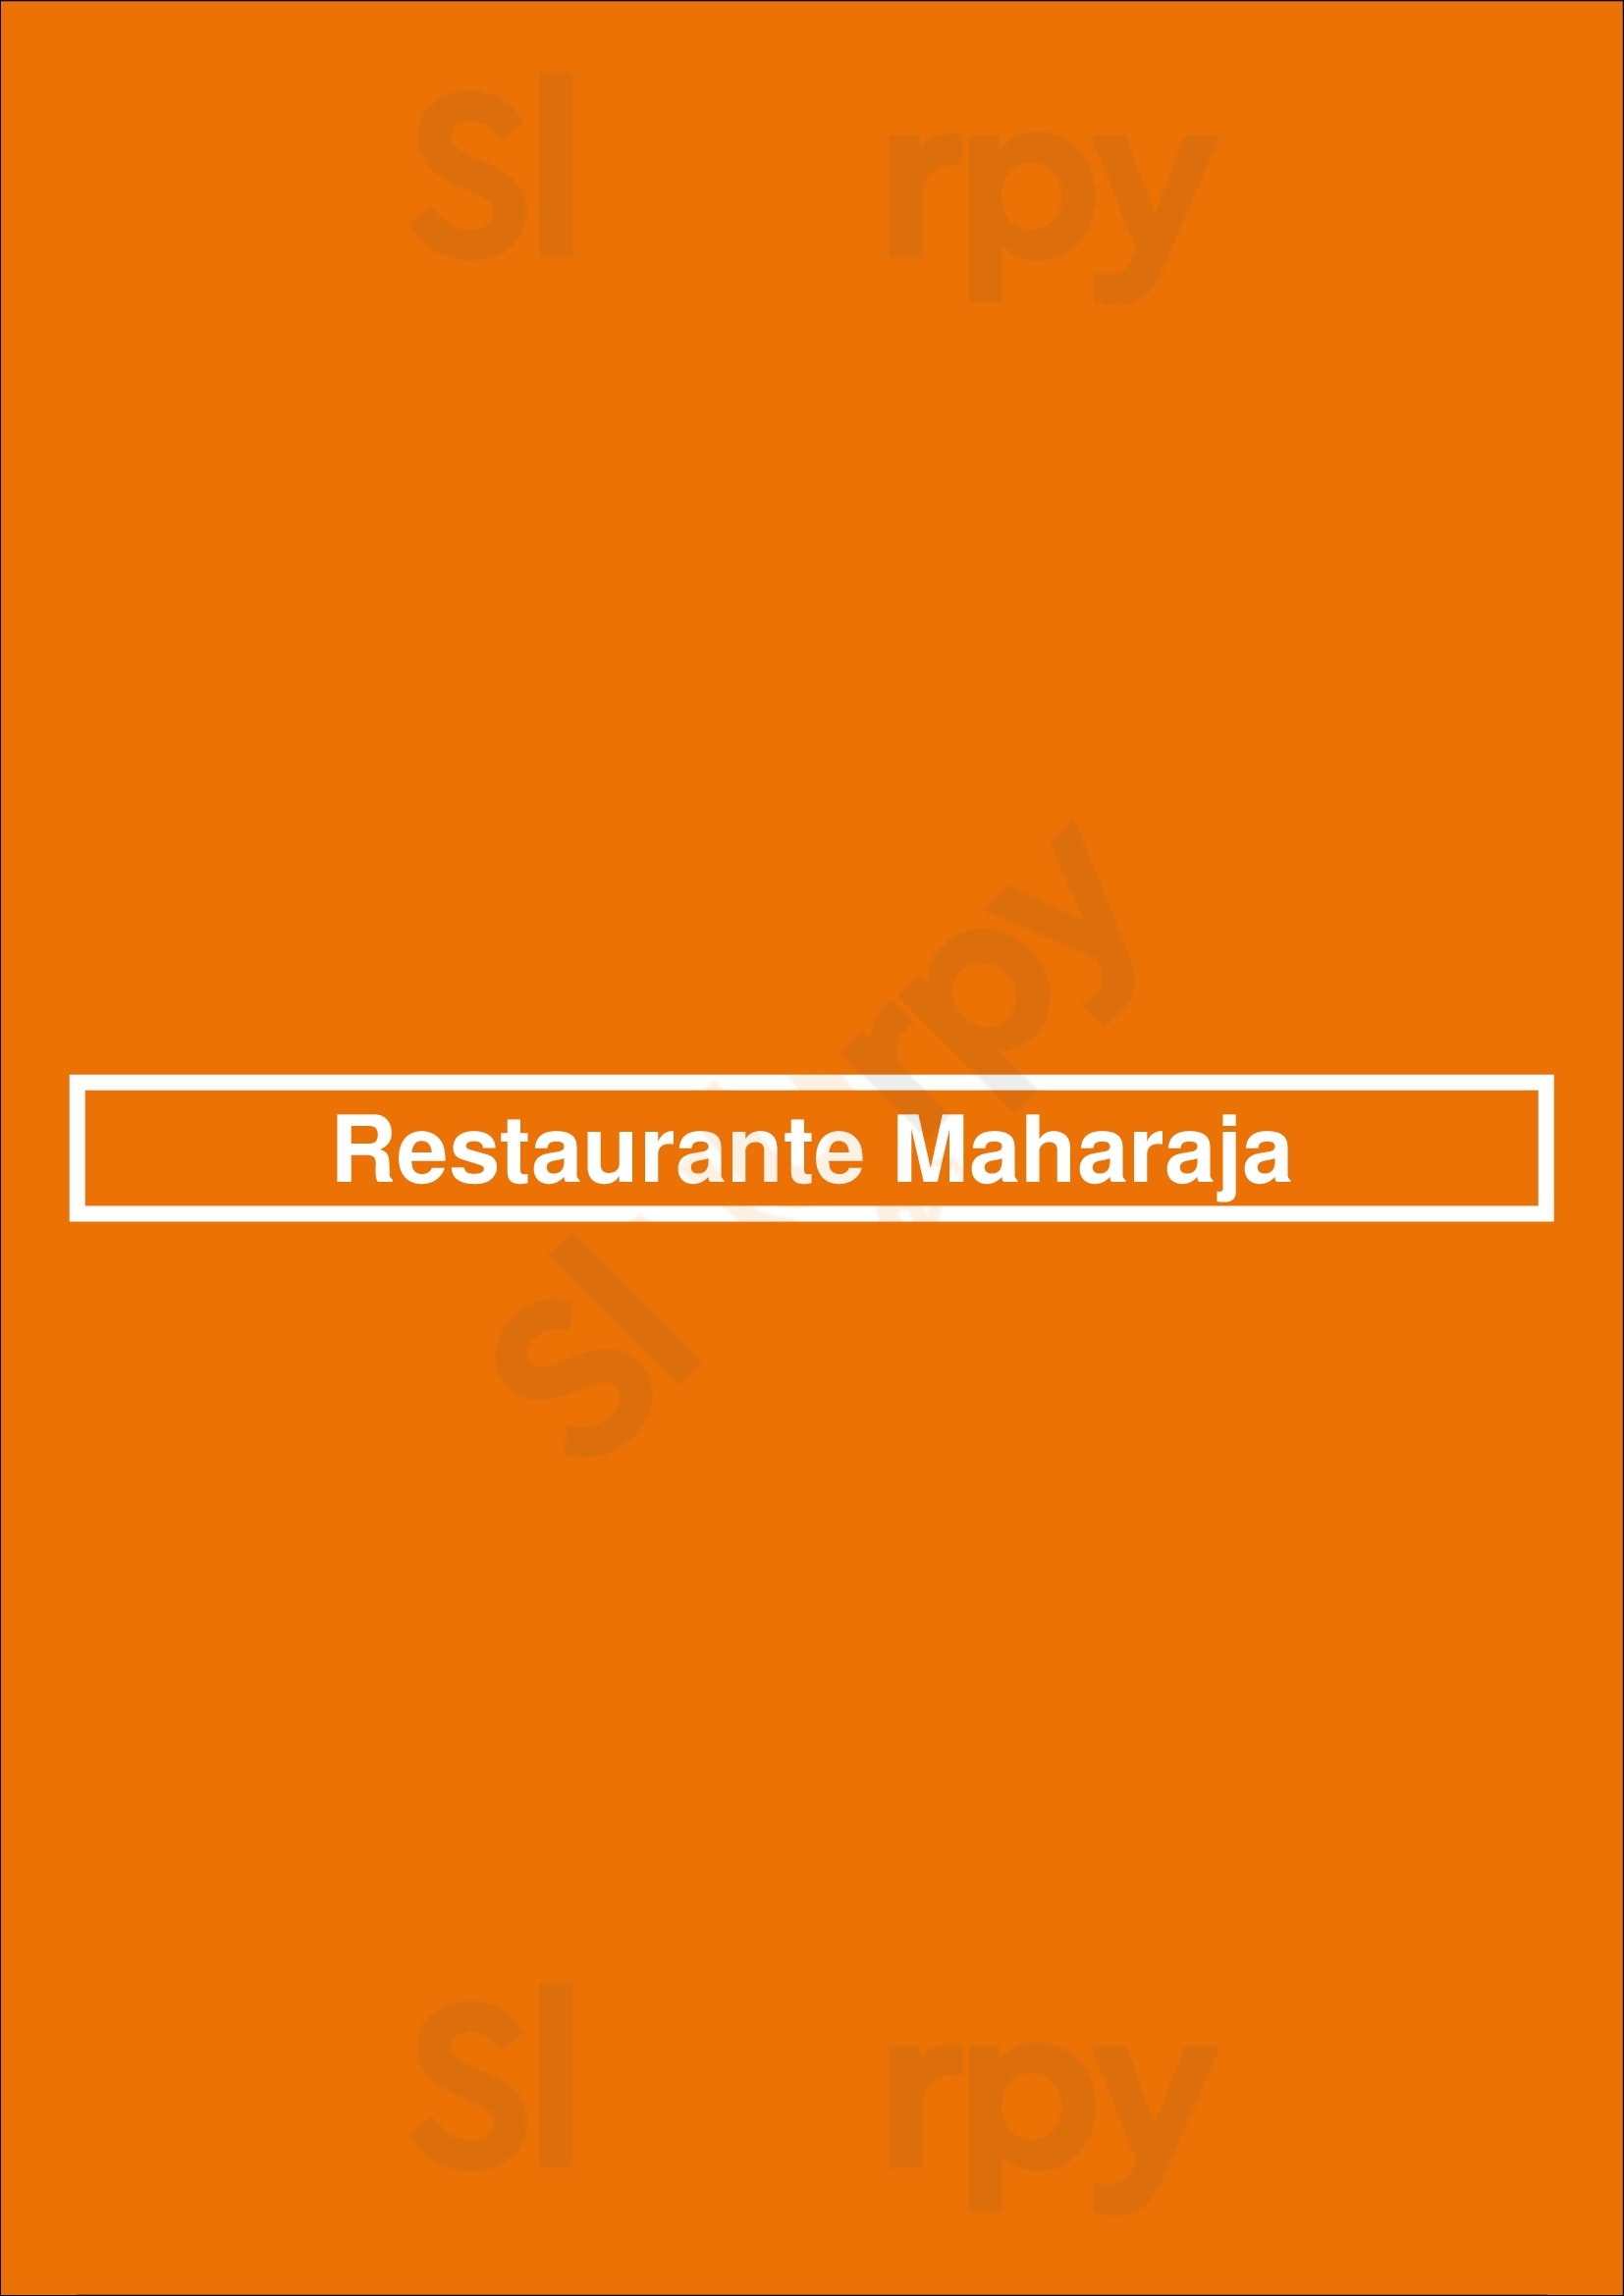 Restaurante Maharaja Lisboa Menu - 1